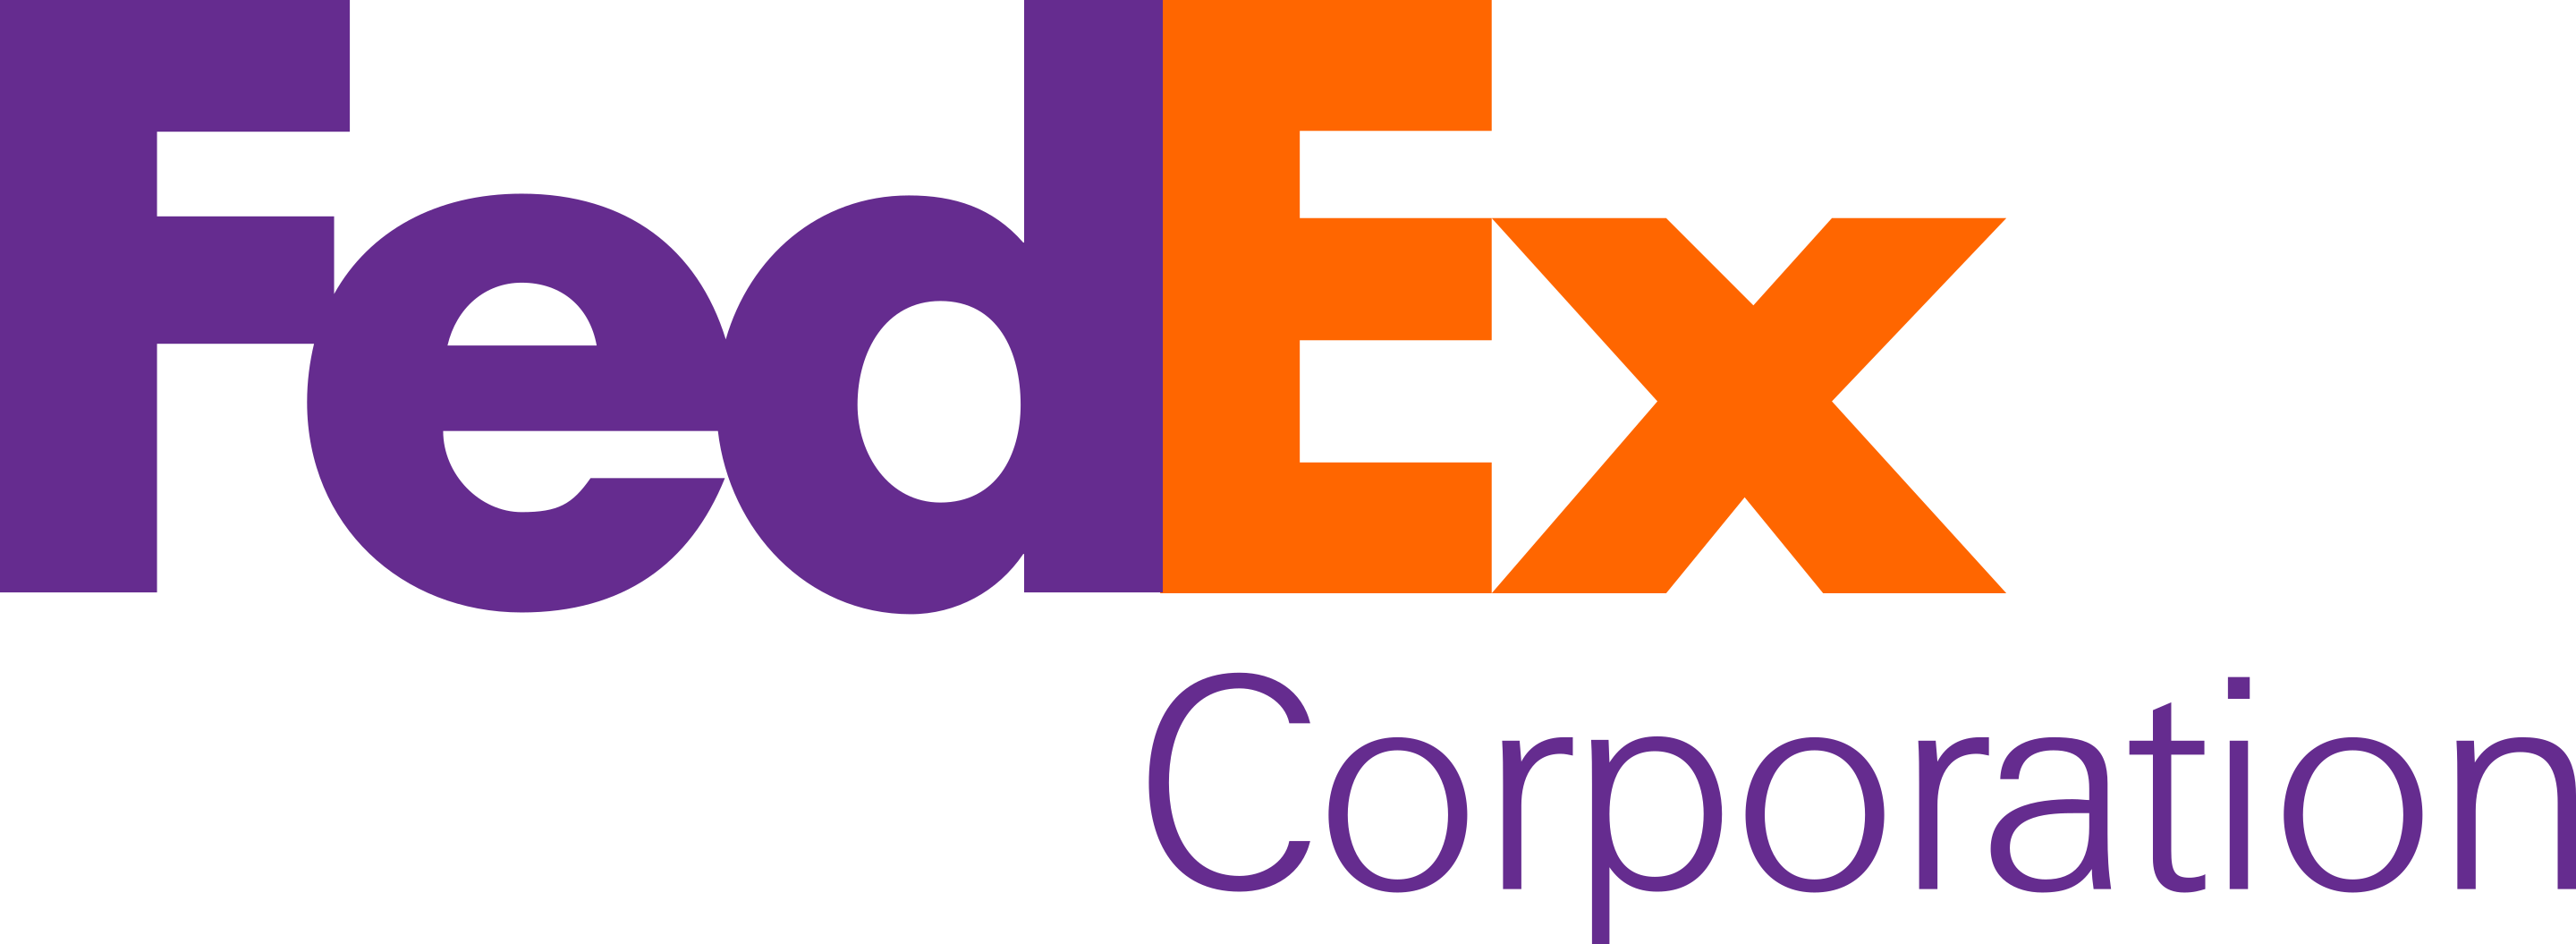 FedEx Corporation - 2016 Logo.svg